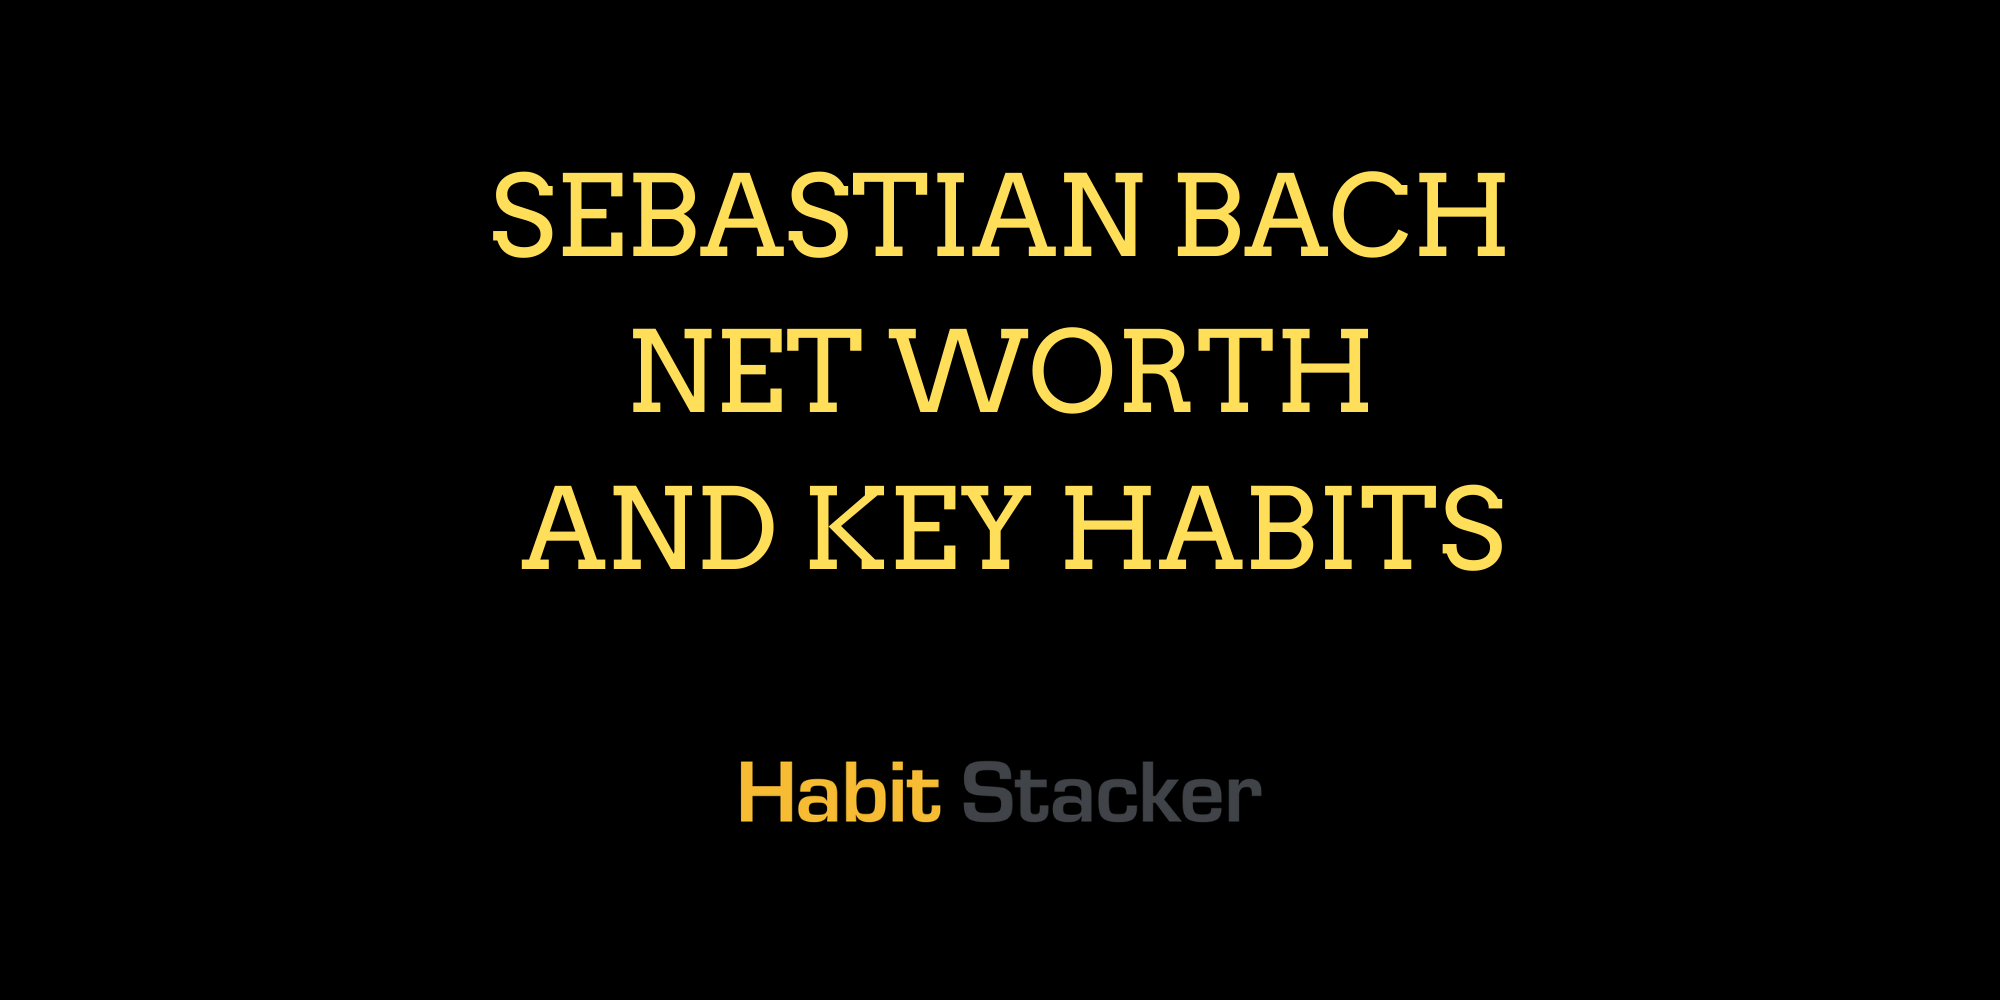 Sebastian Bach Net Worth and Key Habits